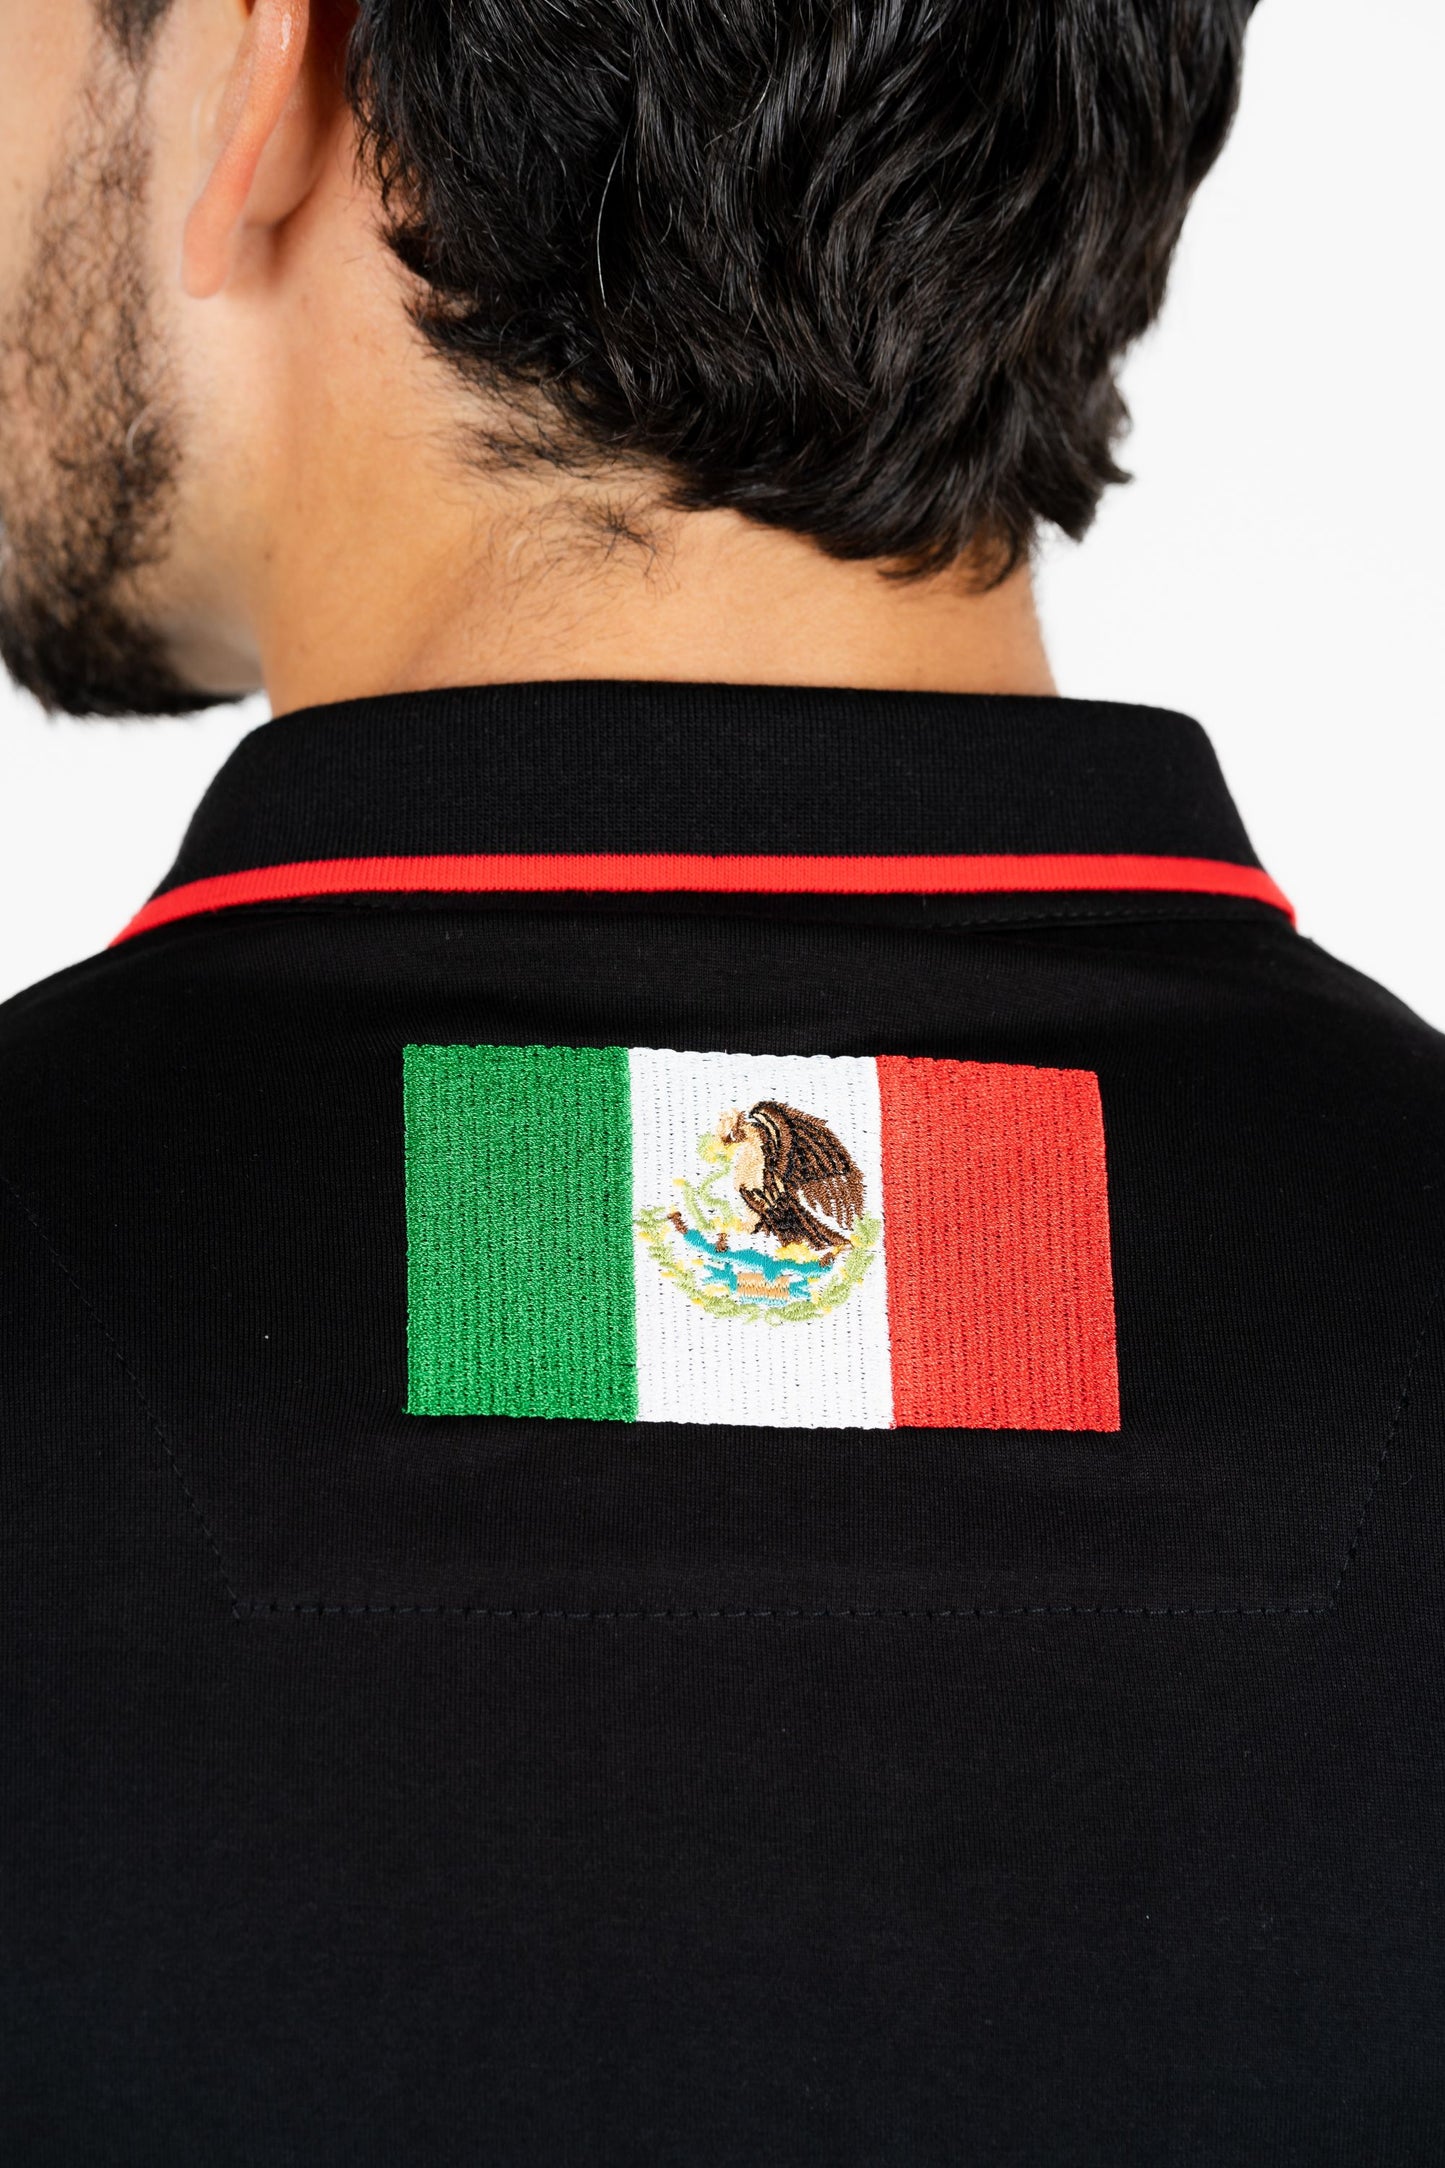 Men's Platini Mexico Jersey Cotton Polo